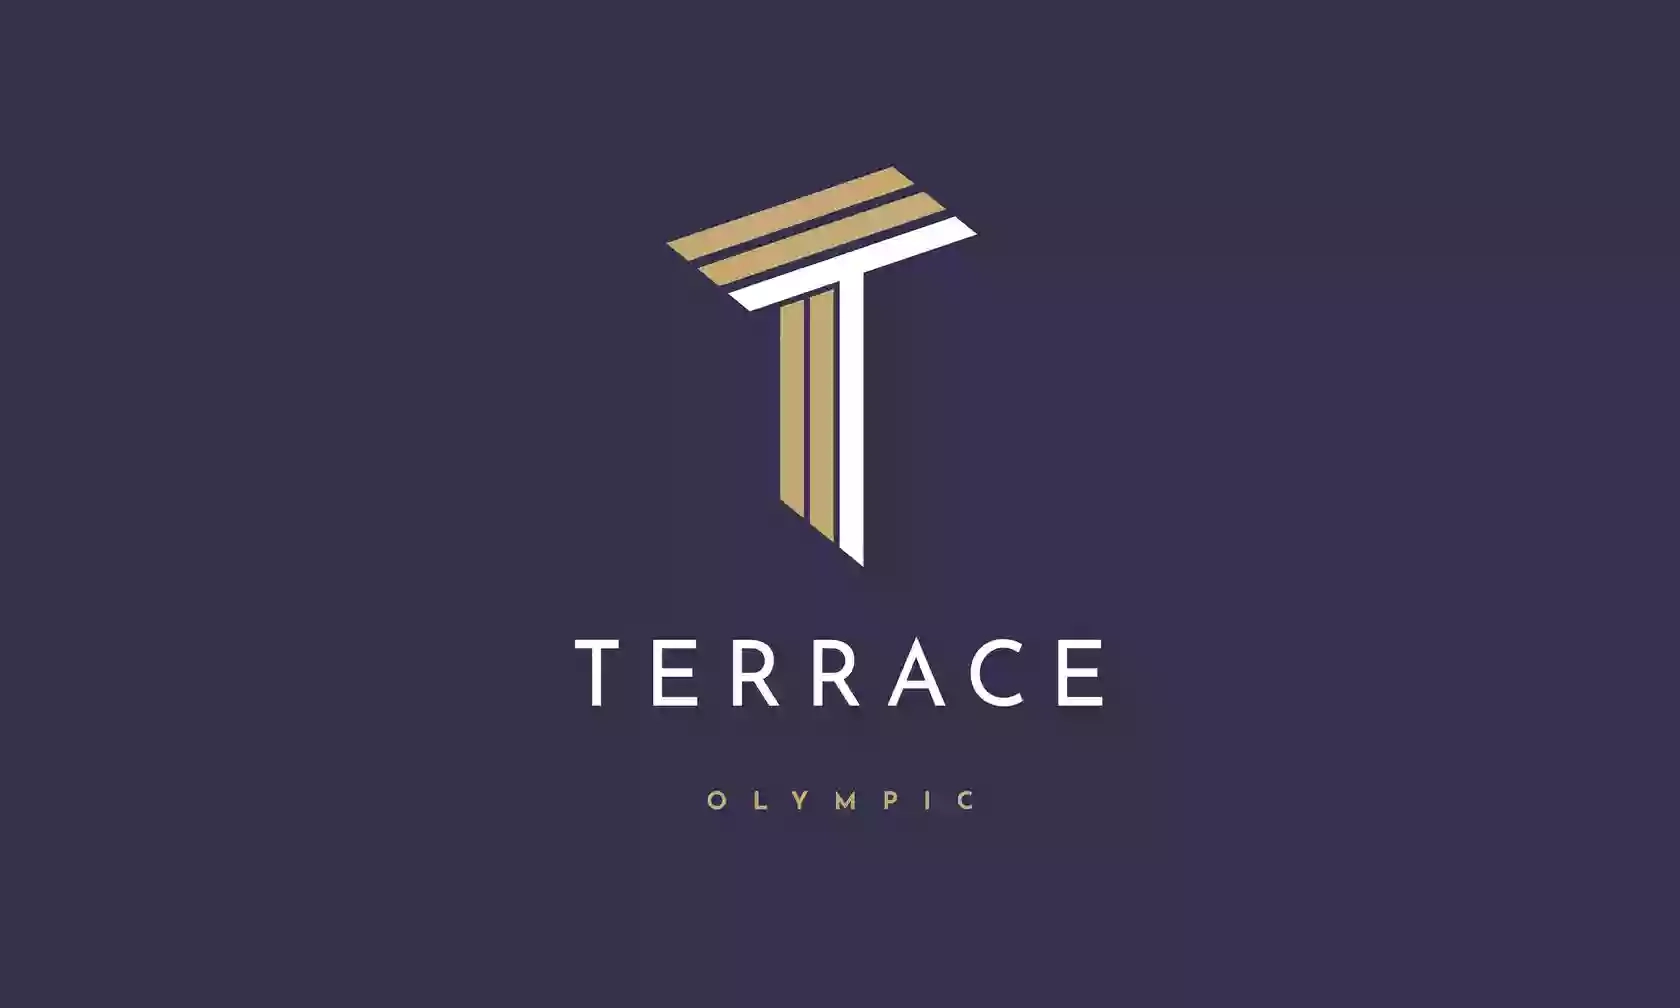 Terrace Olympic